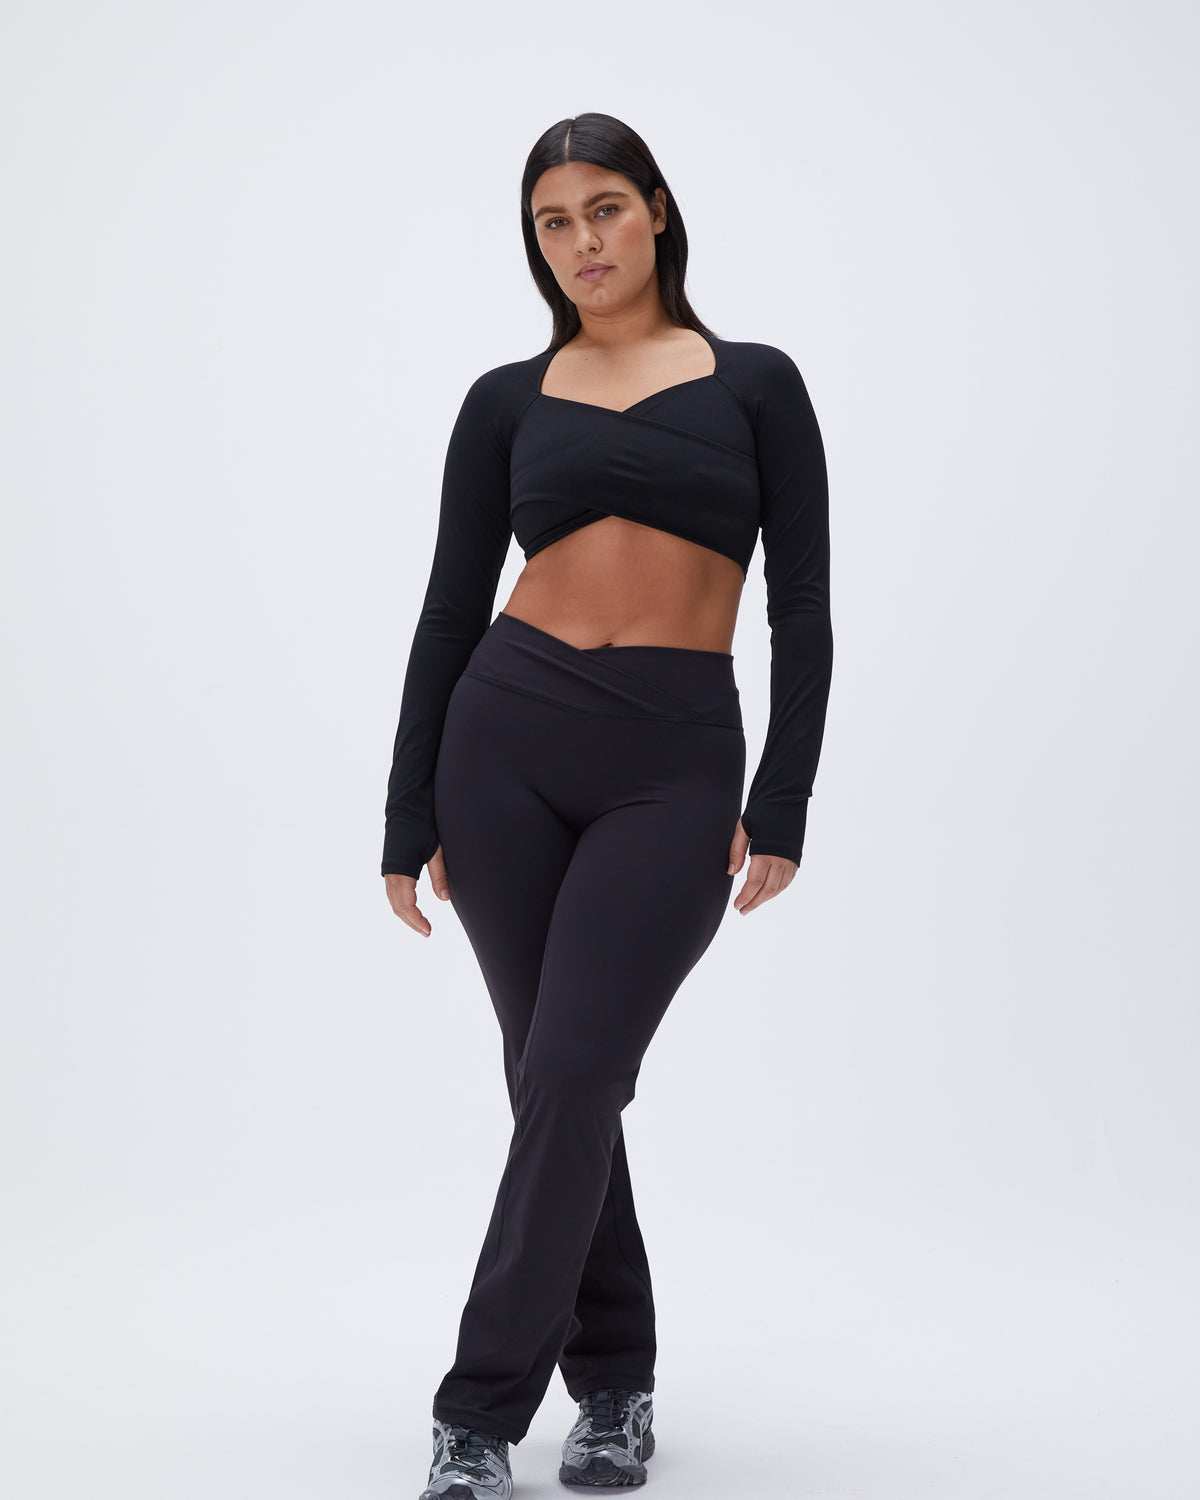 Apana  Black Floral Workout Pants Size L - $18 - From Meg